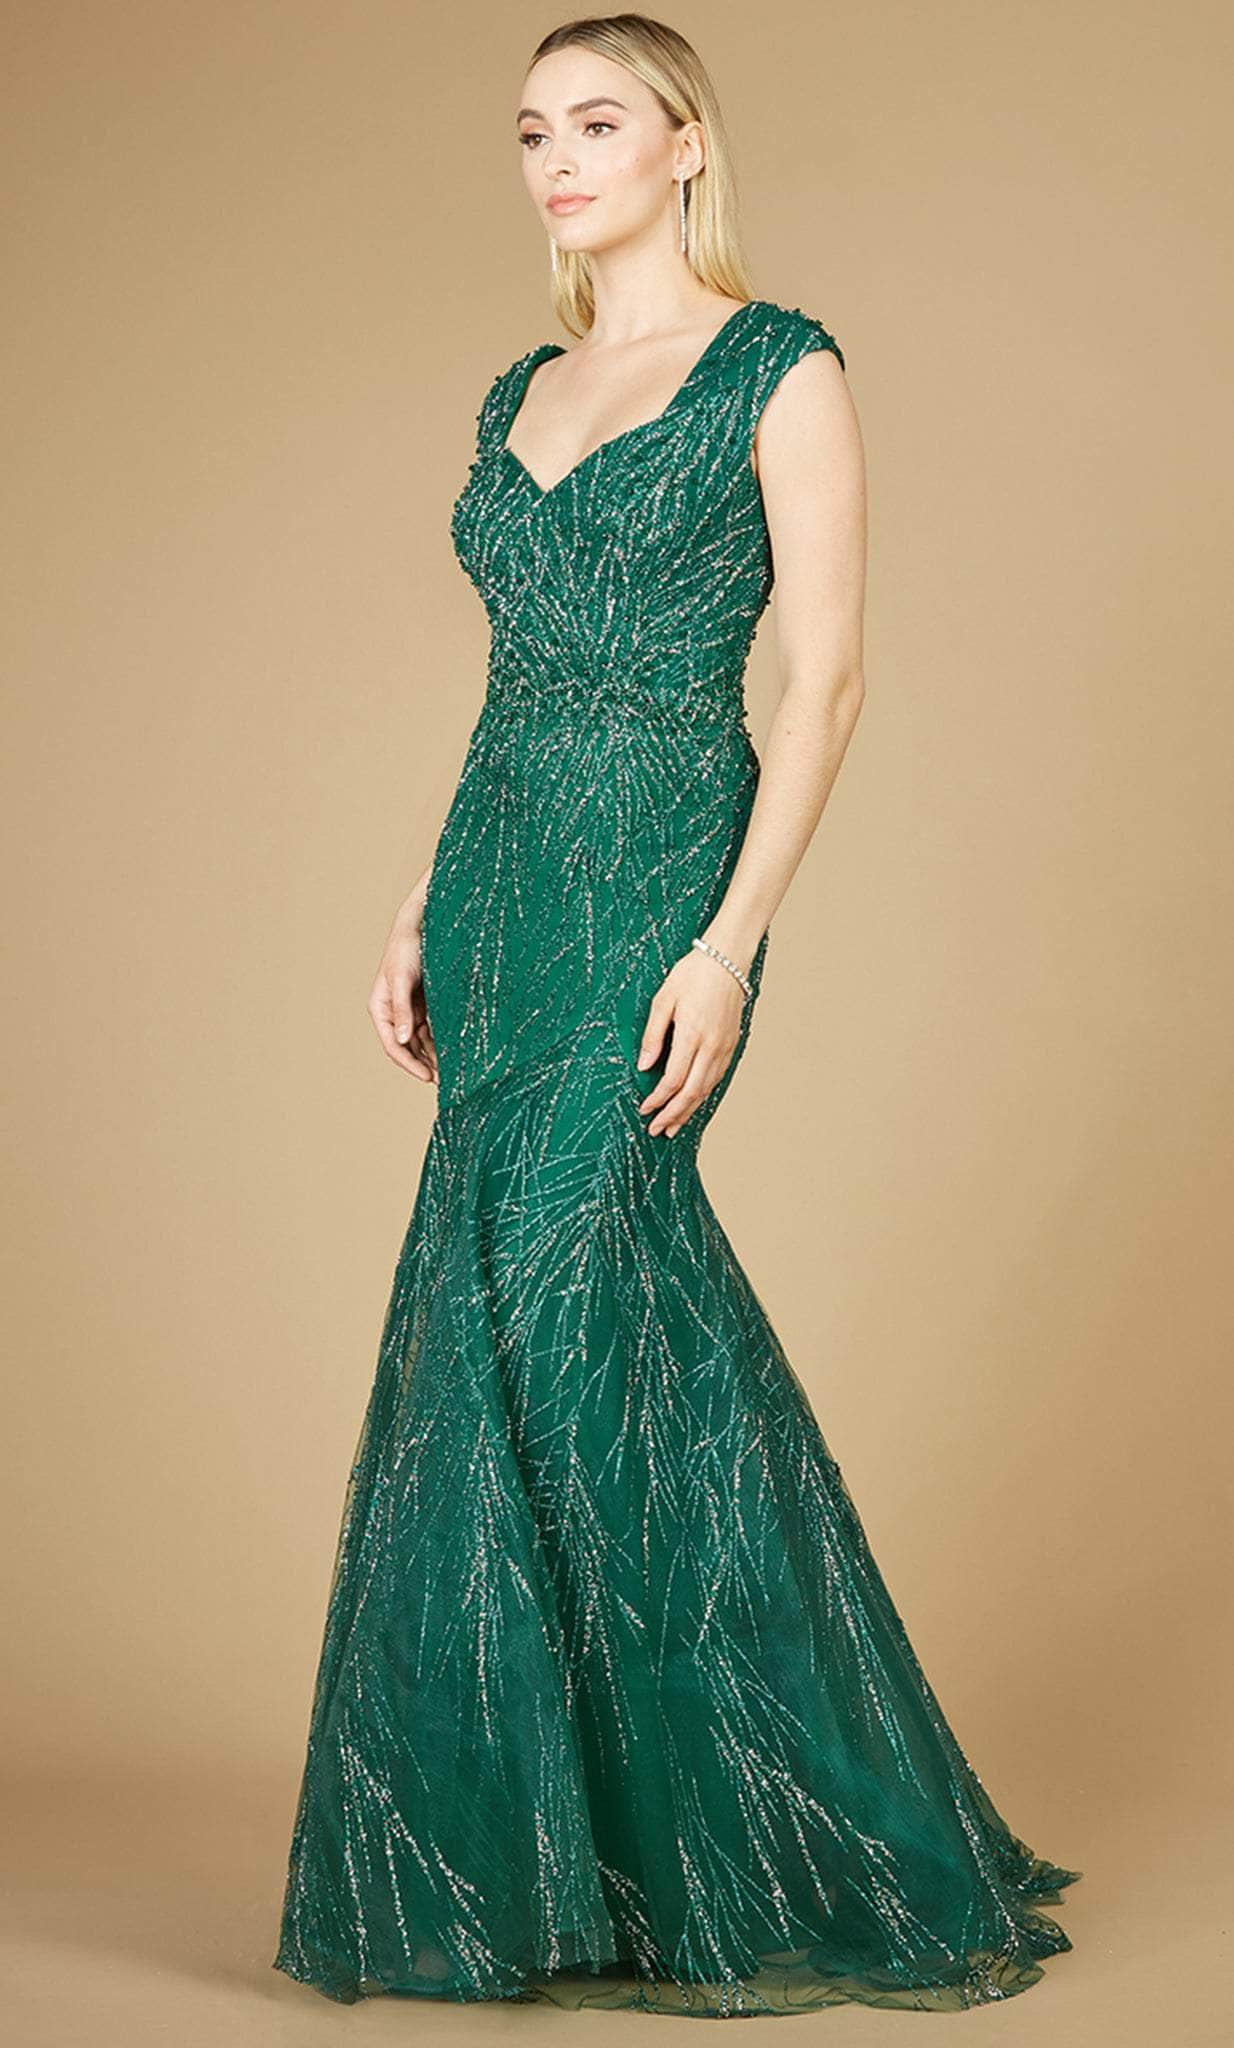 Lara Dresses 29233 - Queen Anne Neck Mermaid Gown
